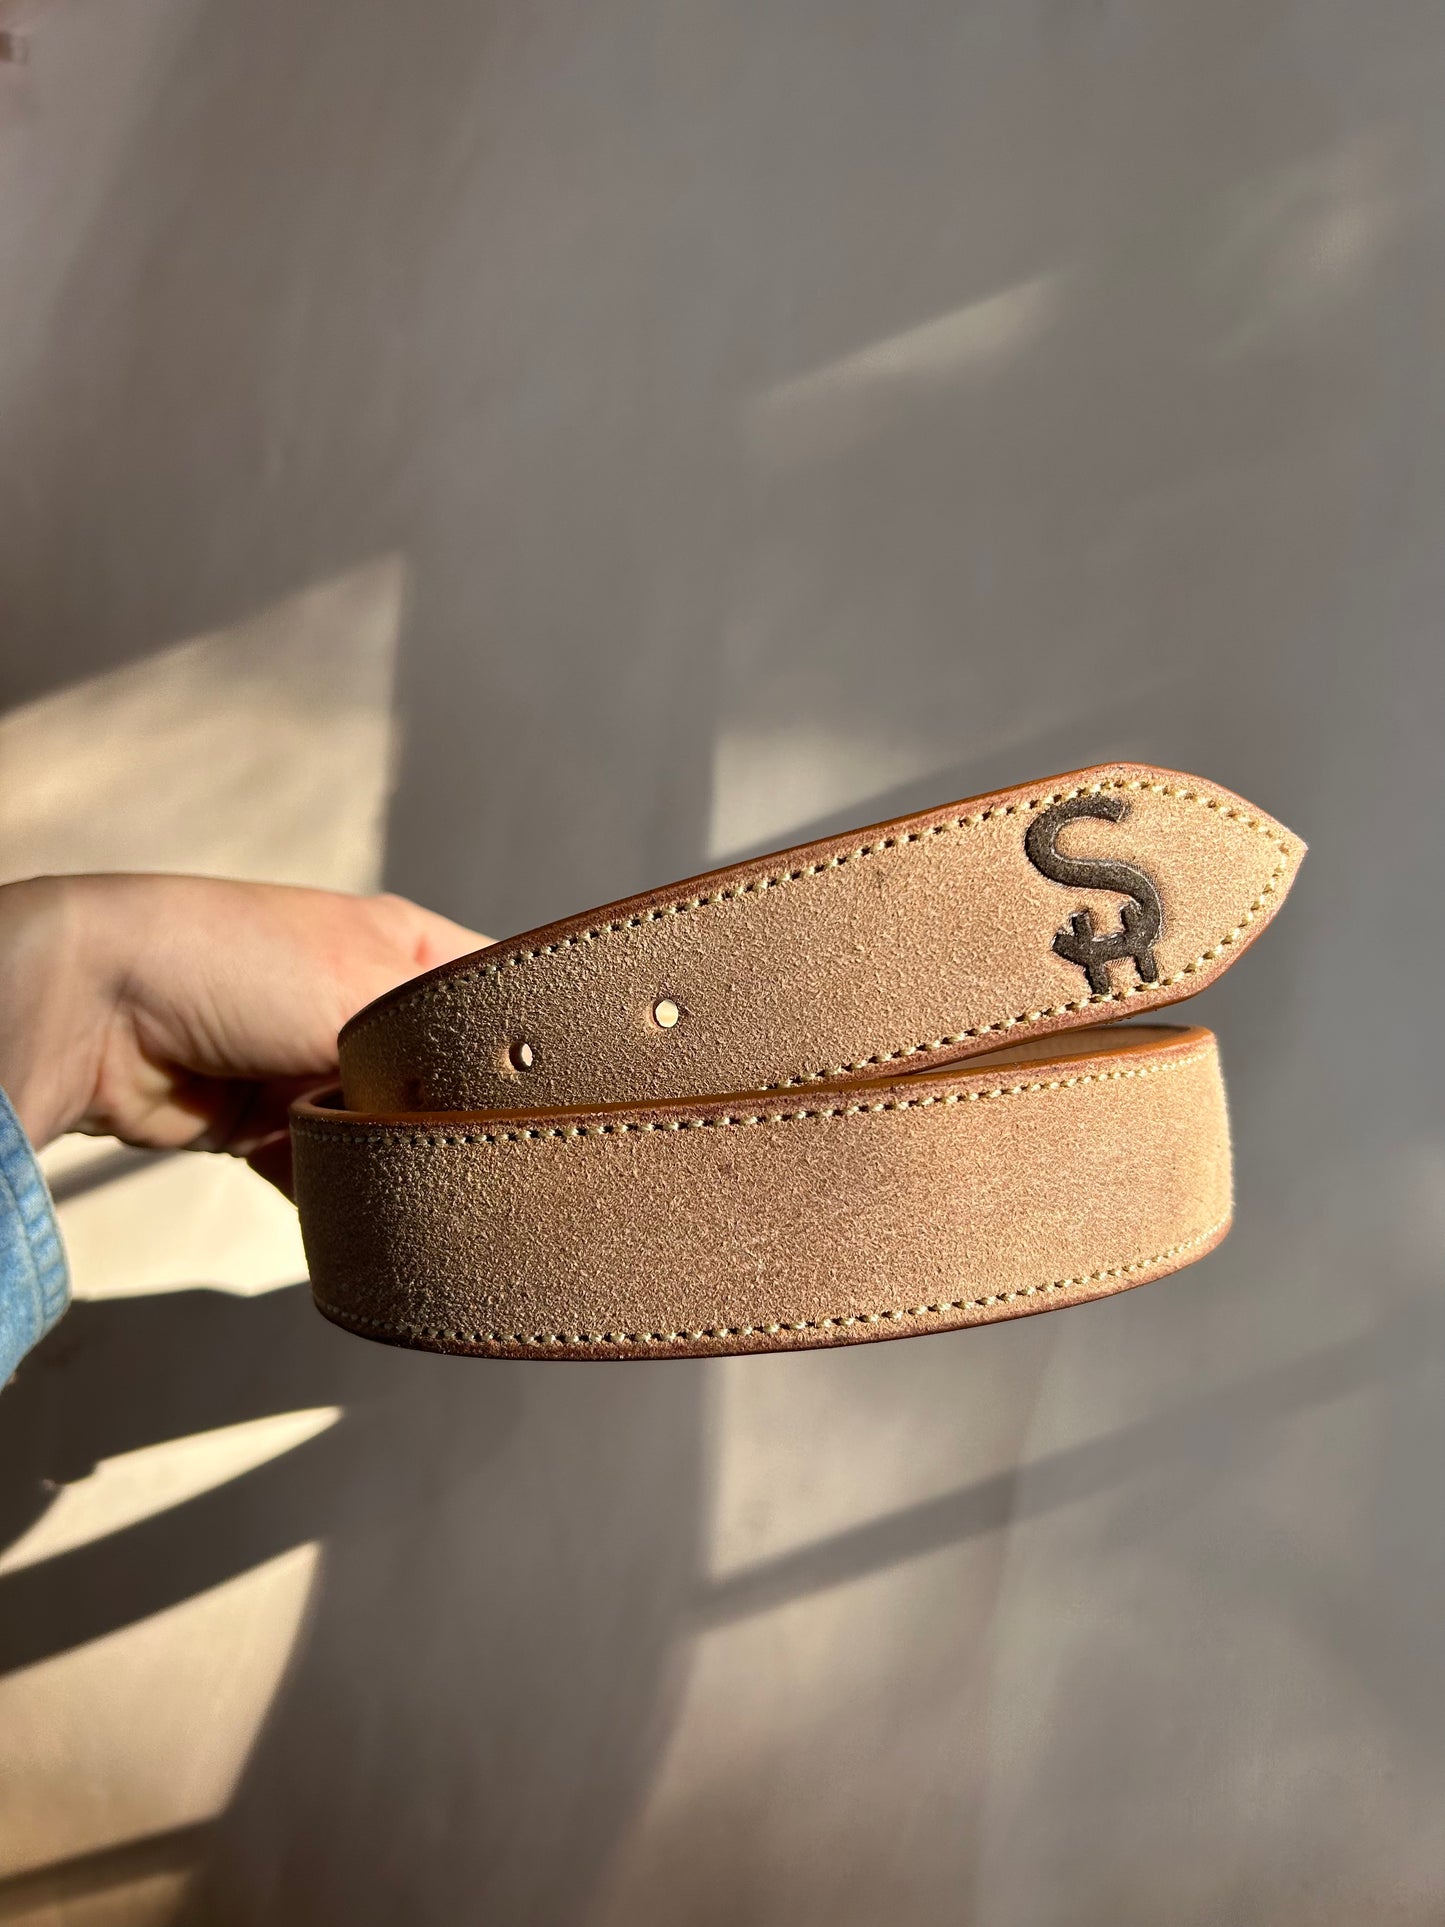 Rough-out custom belt